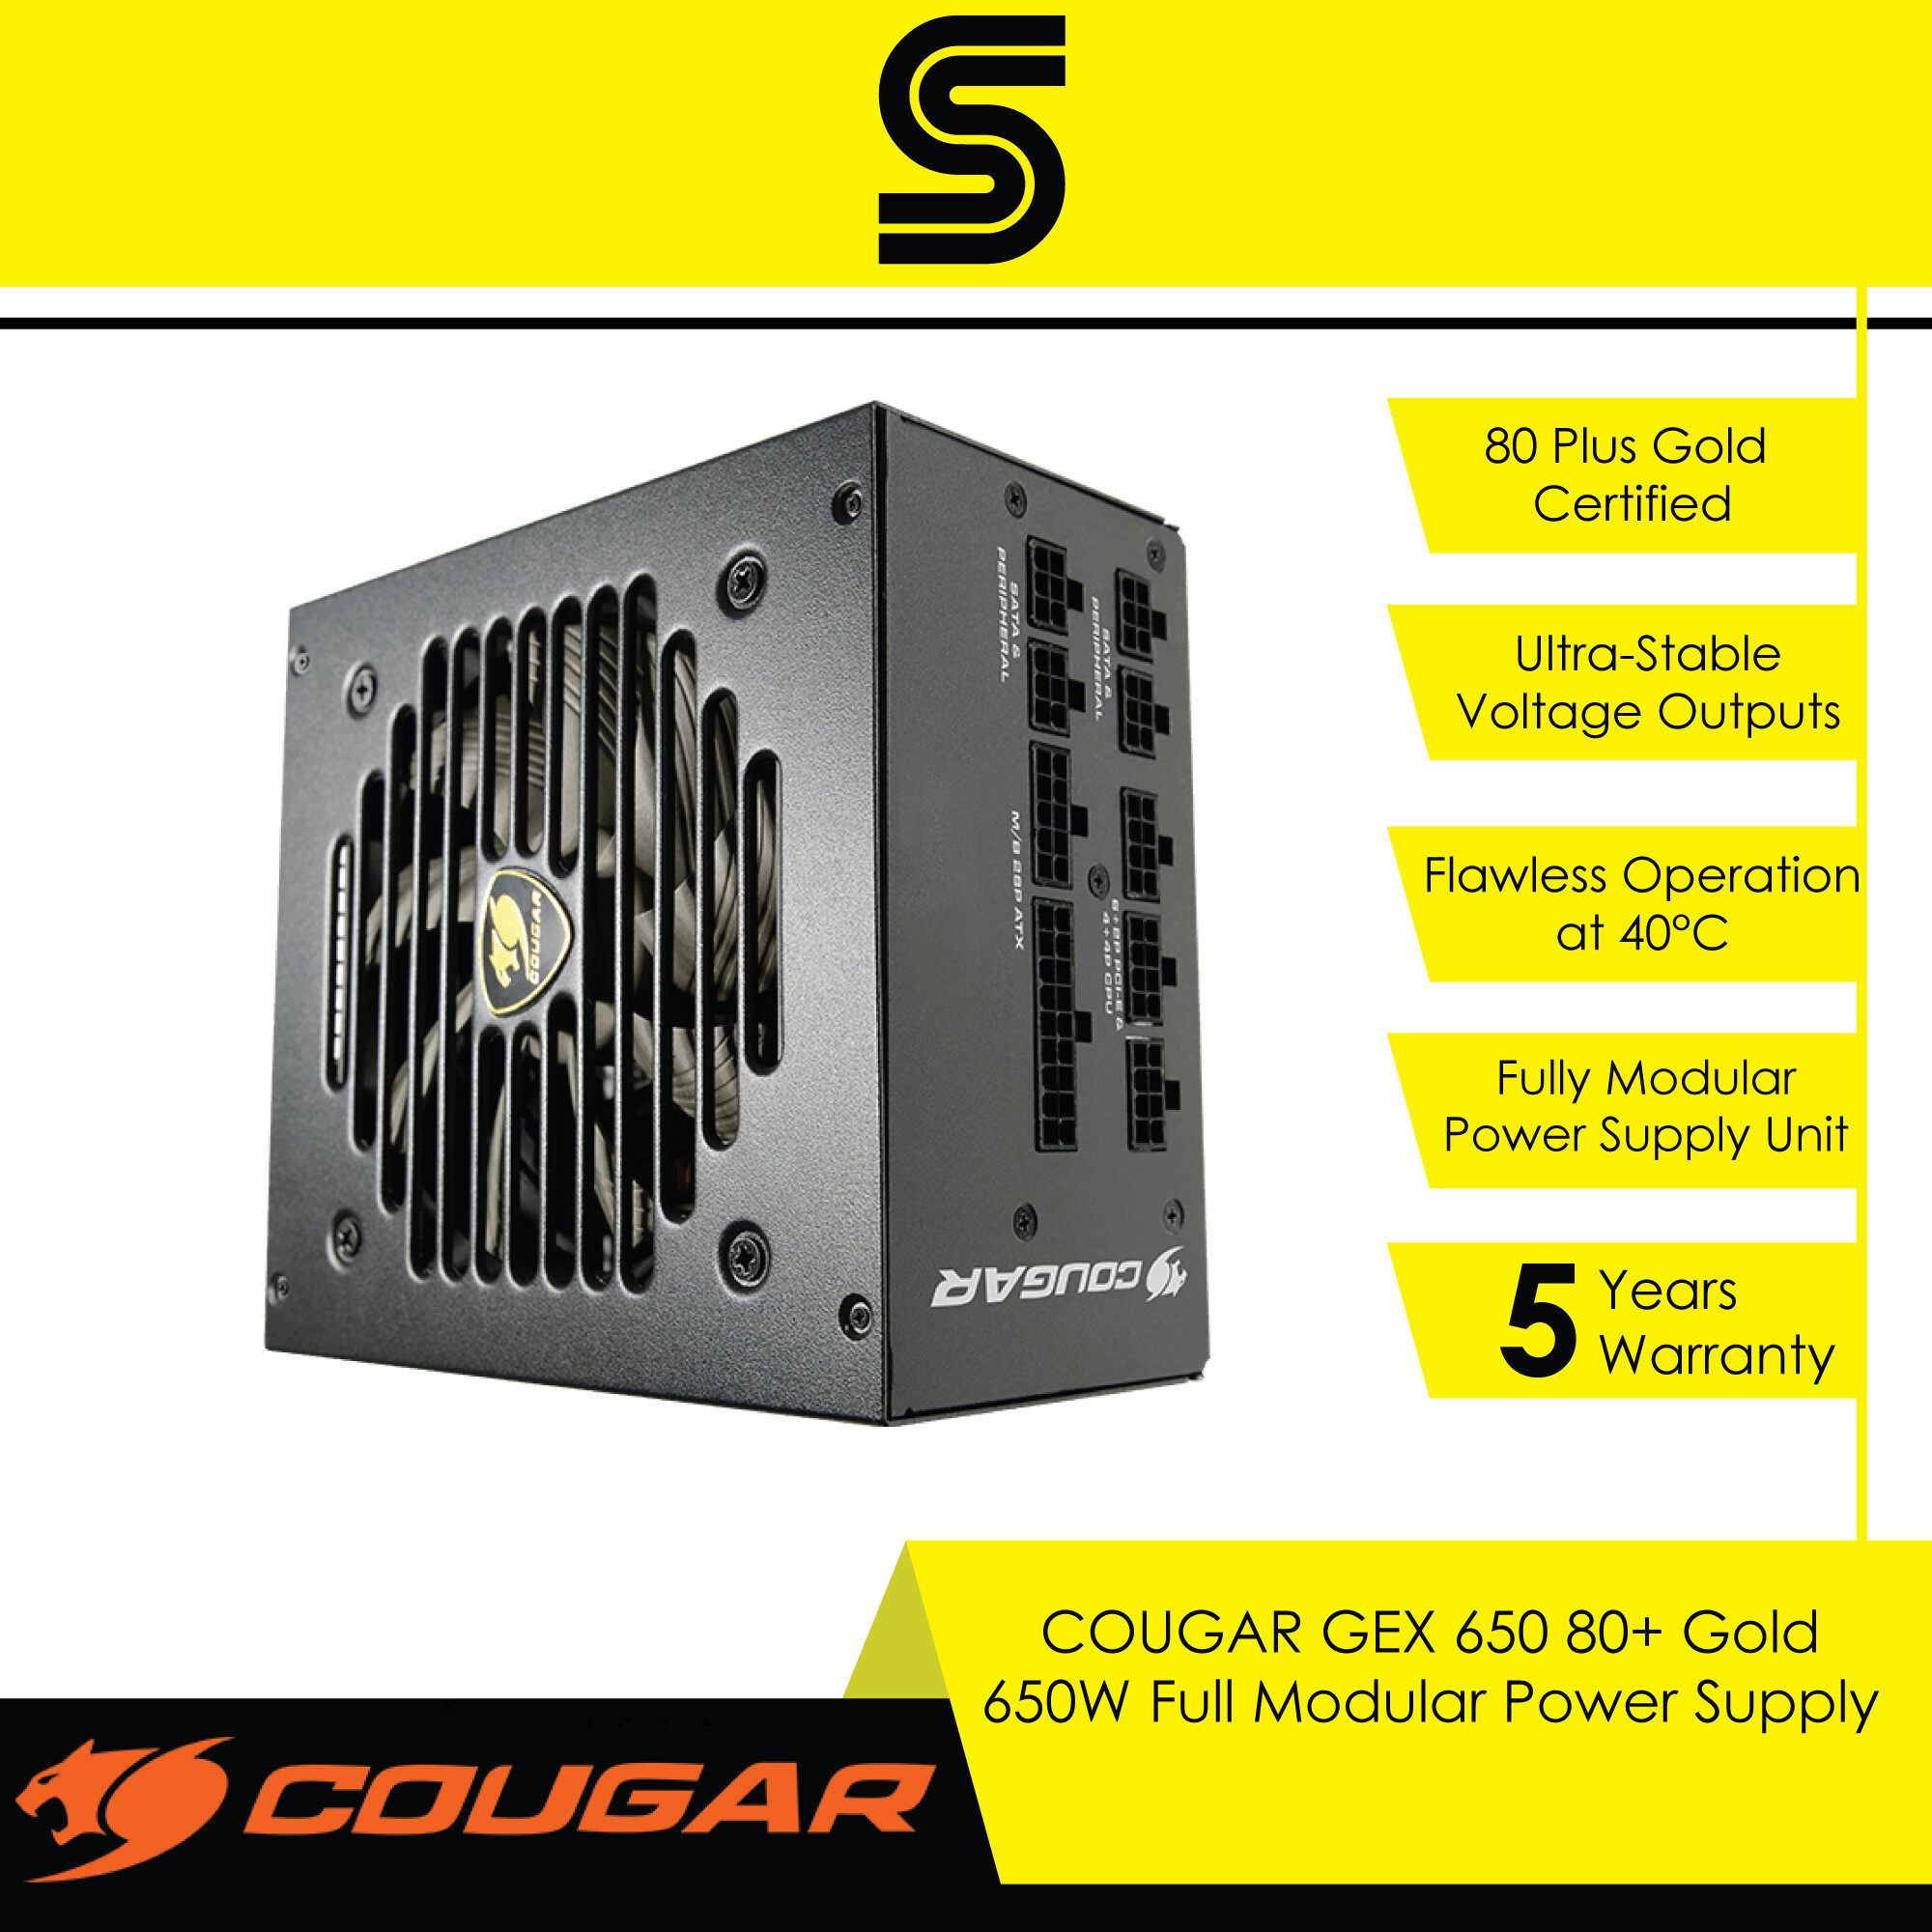 COUGAR GEX 650 80+ Gold 650w Full Modular Power Supply